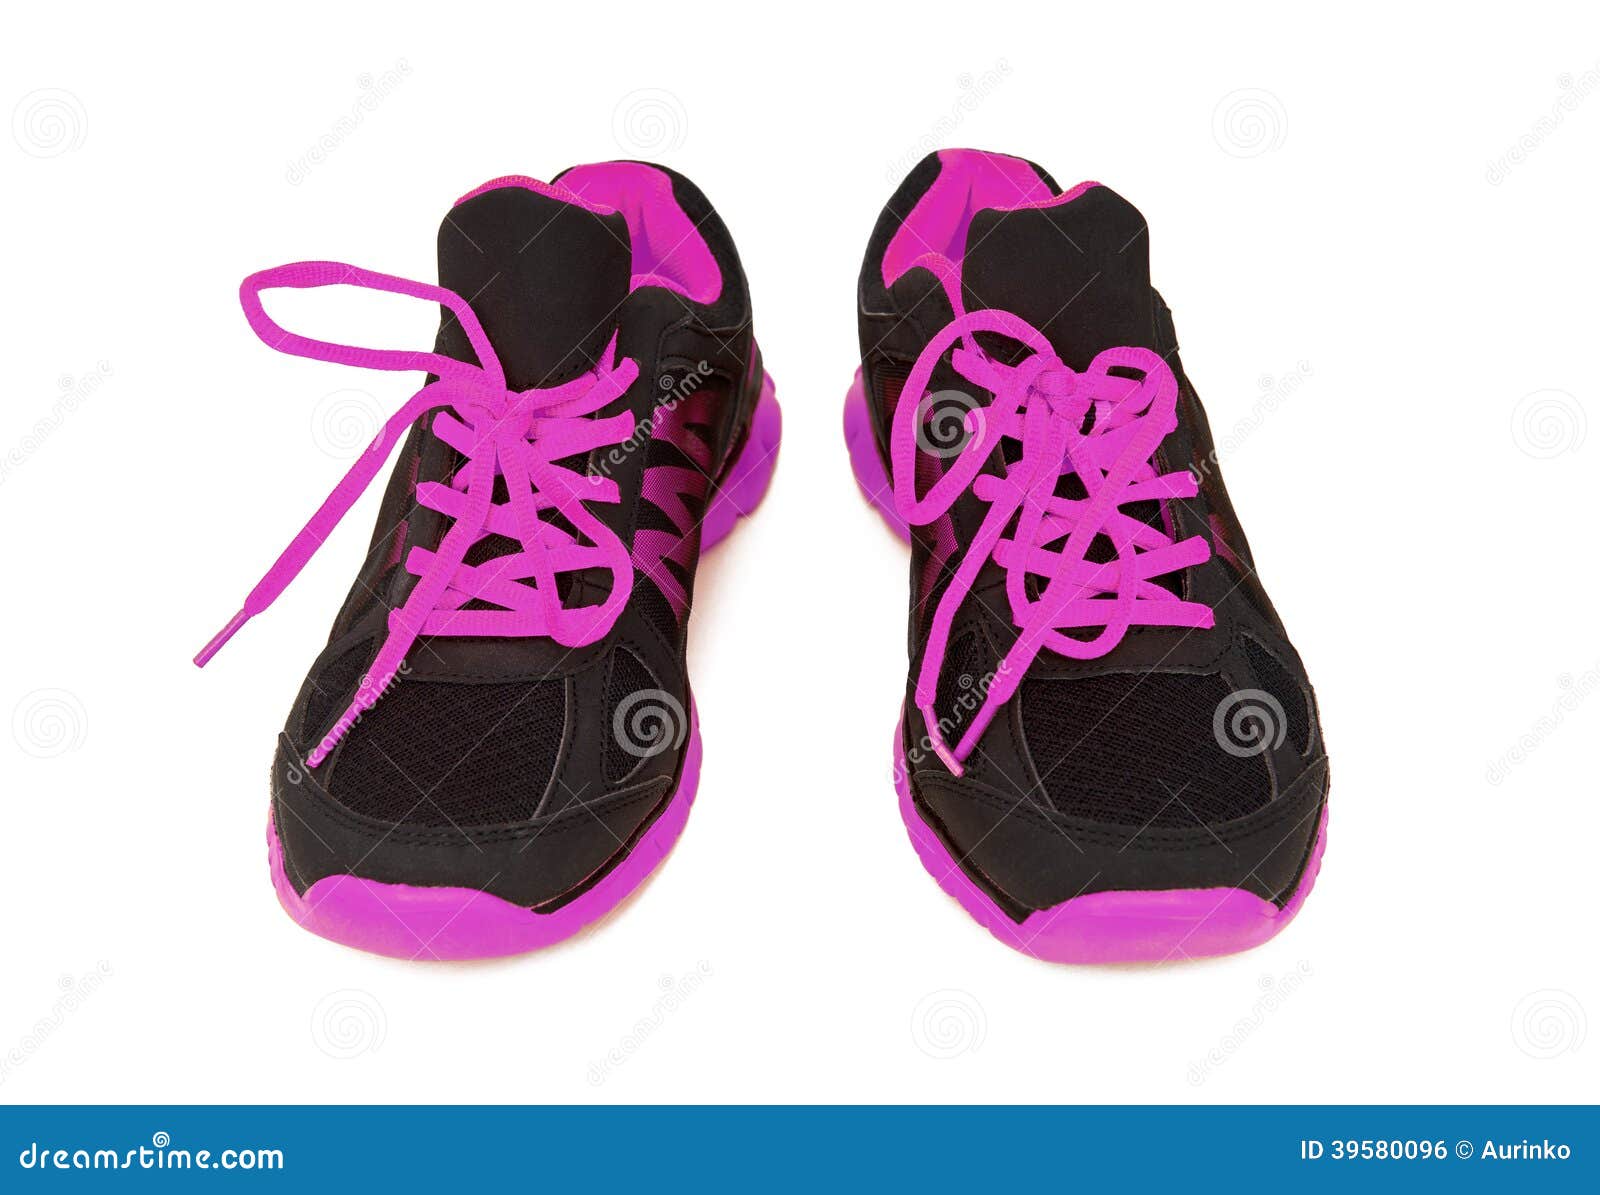 Sport shoes stock photo. Image of elegant, exercise, equipment - 39580096